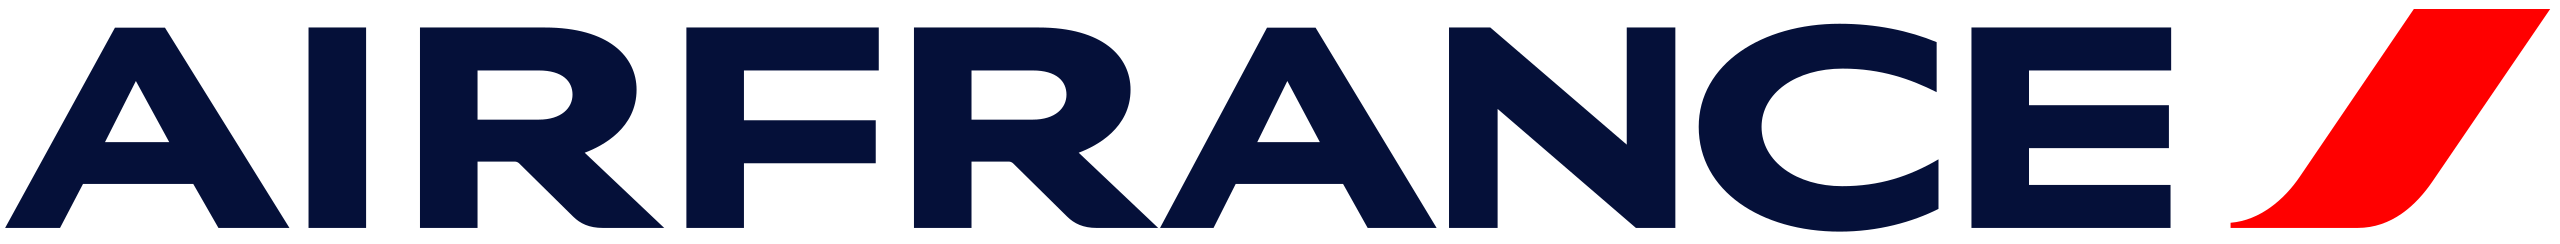 Logo AirFrance